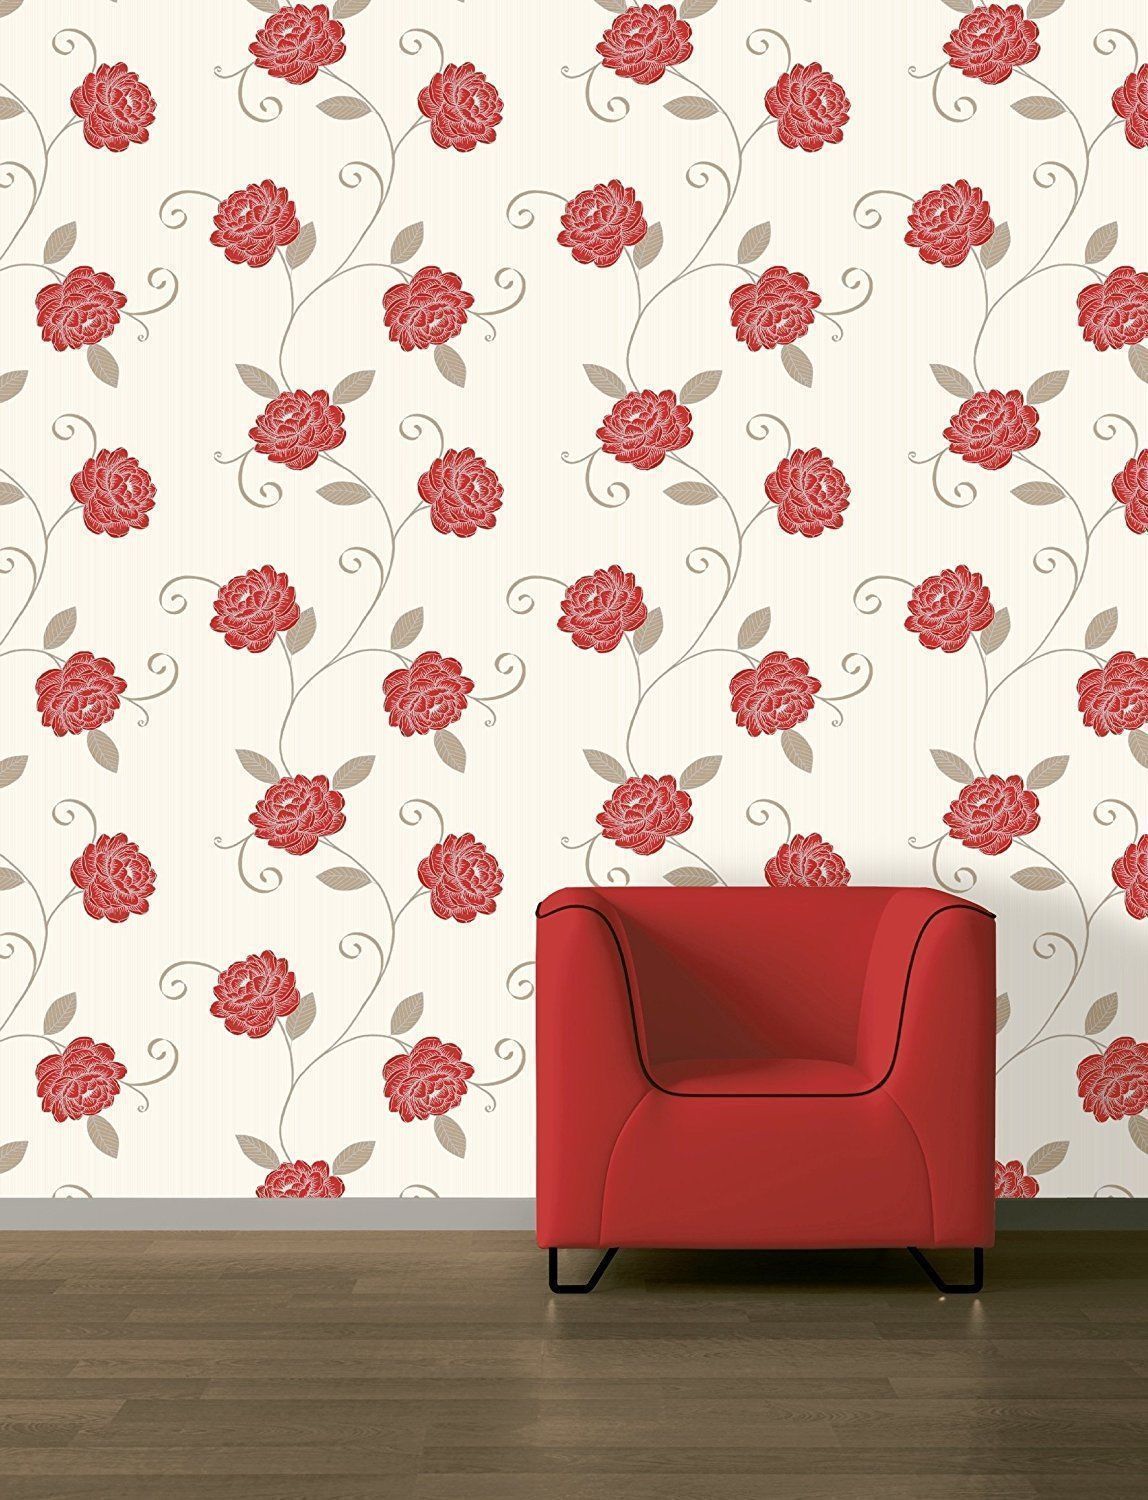 wallpaper hallways trends,wallpaper,red,wall sticker,wall,pattern